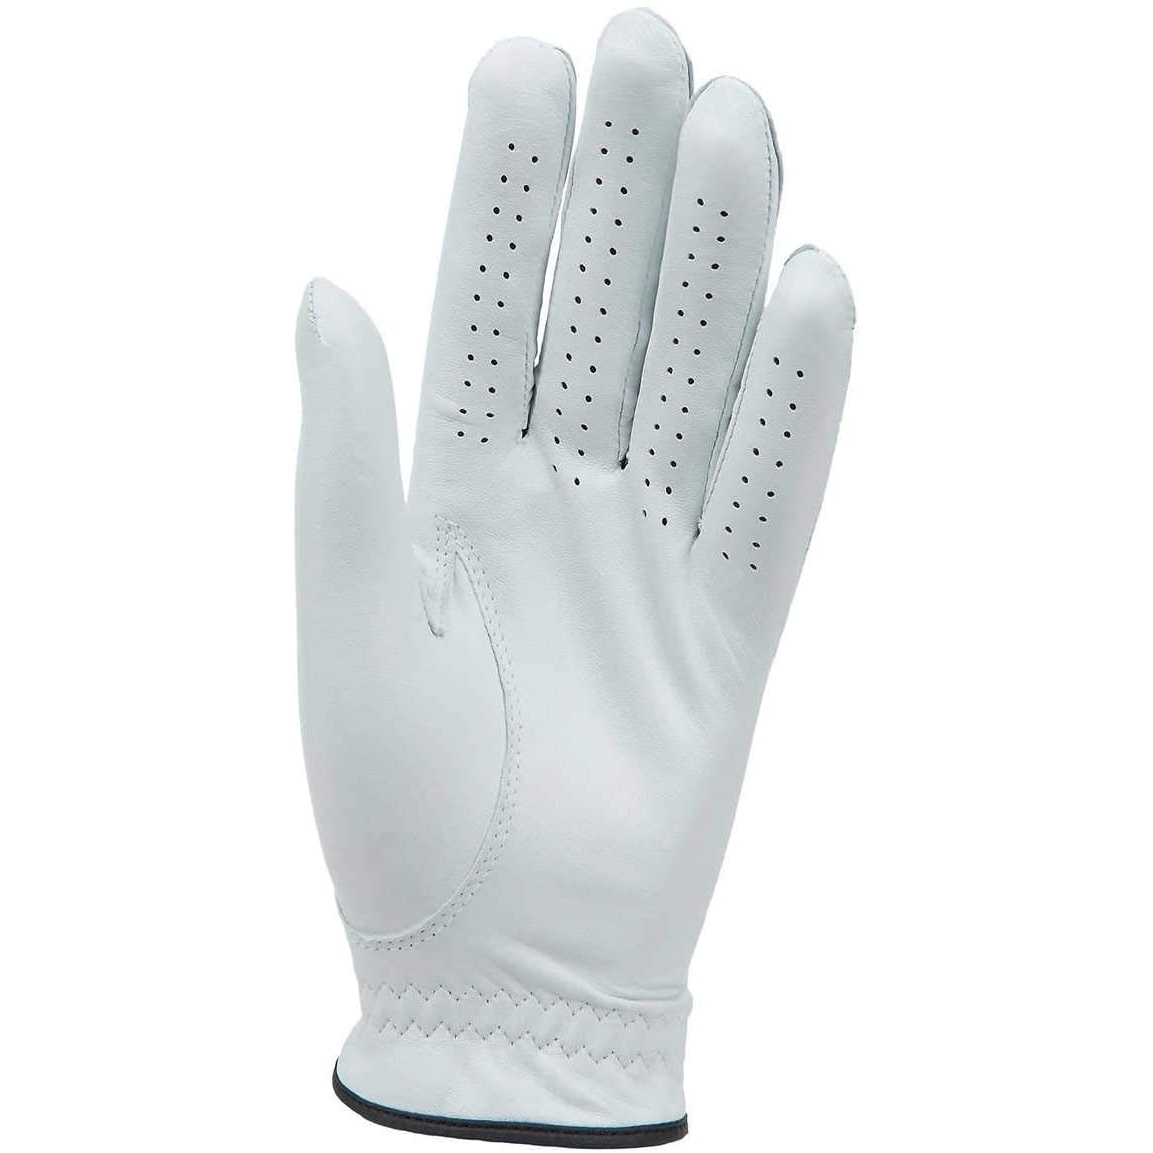 Kirkland Signature Golf Gloves Premium Cabretta Leather, Small (4 Count)